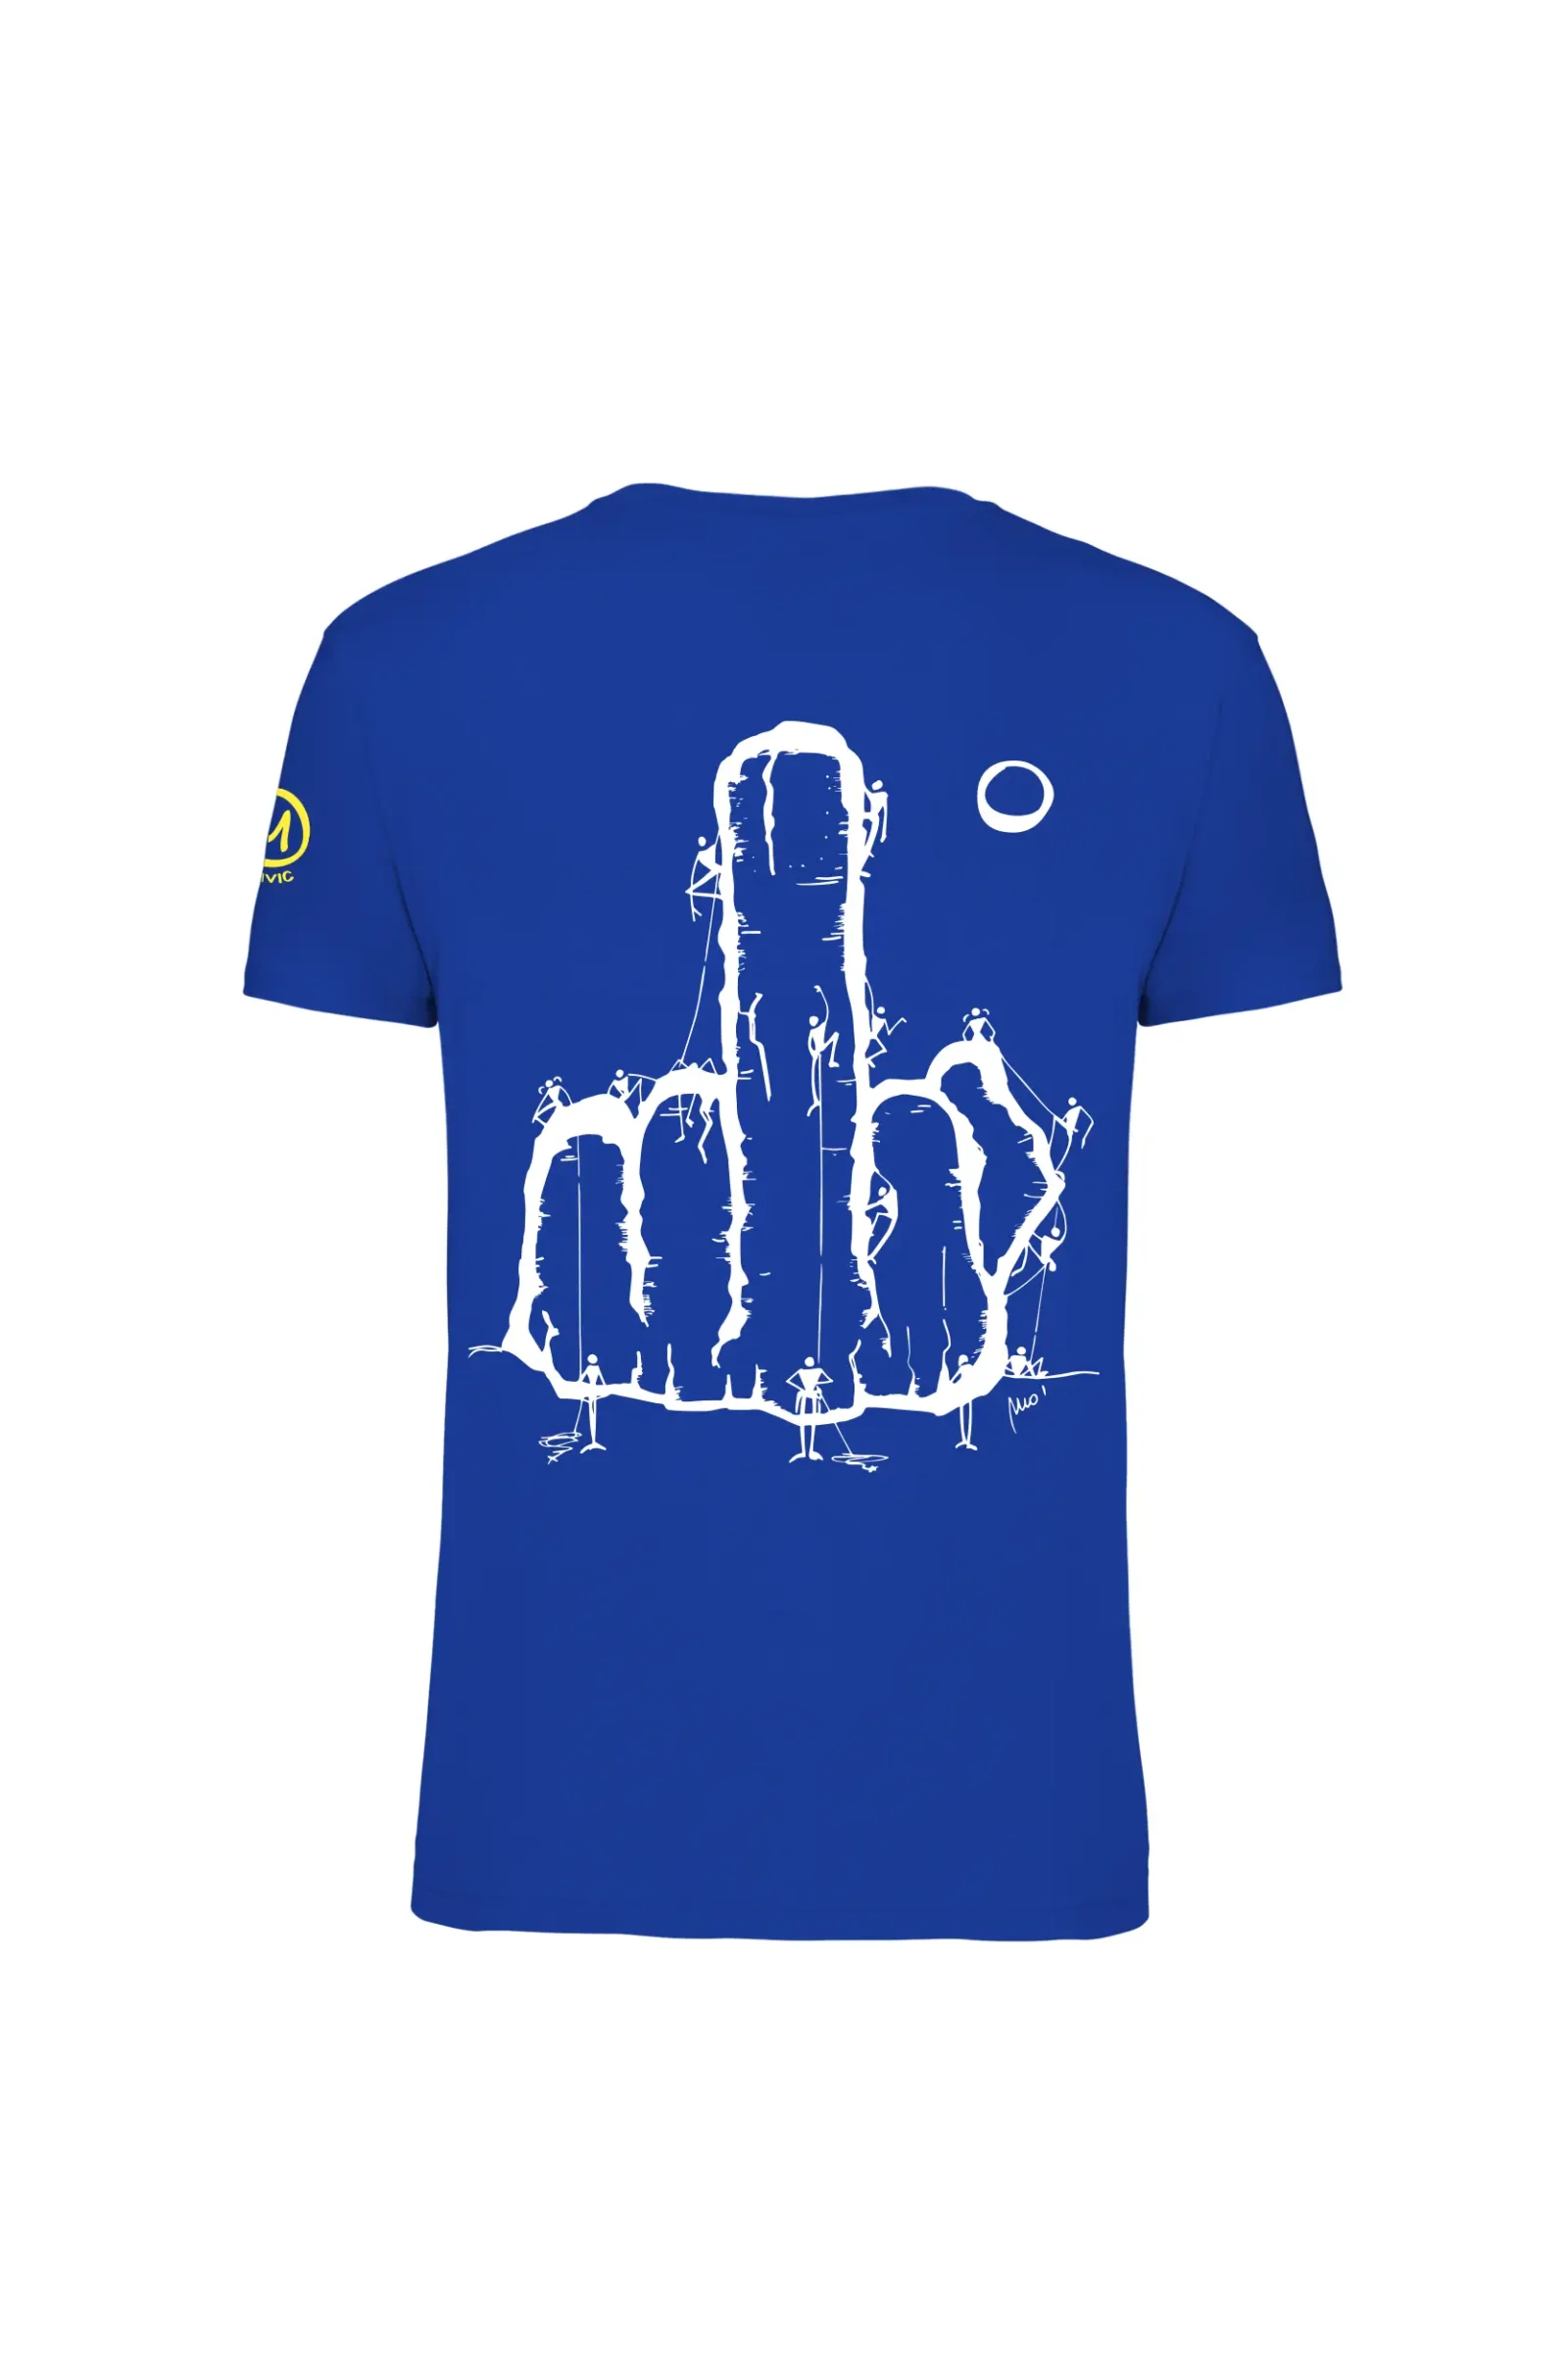 T-shirt d'escalade homme - coton bleu roi - graphisme "Fuck the System" - HASH MONVIC